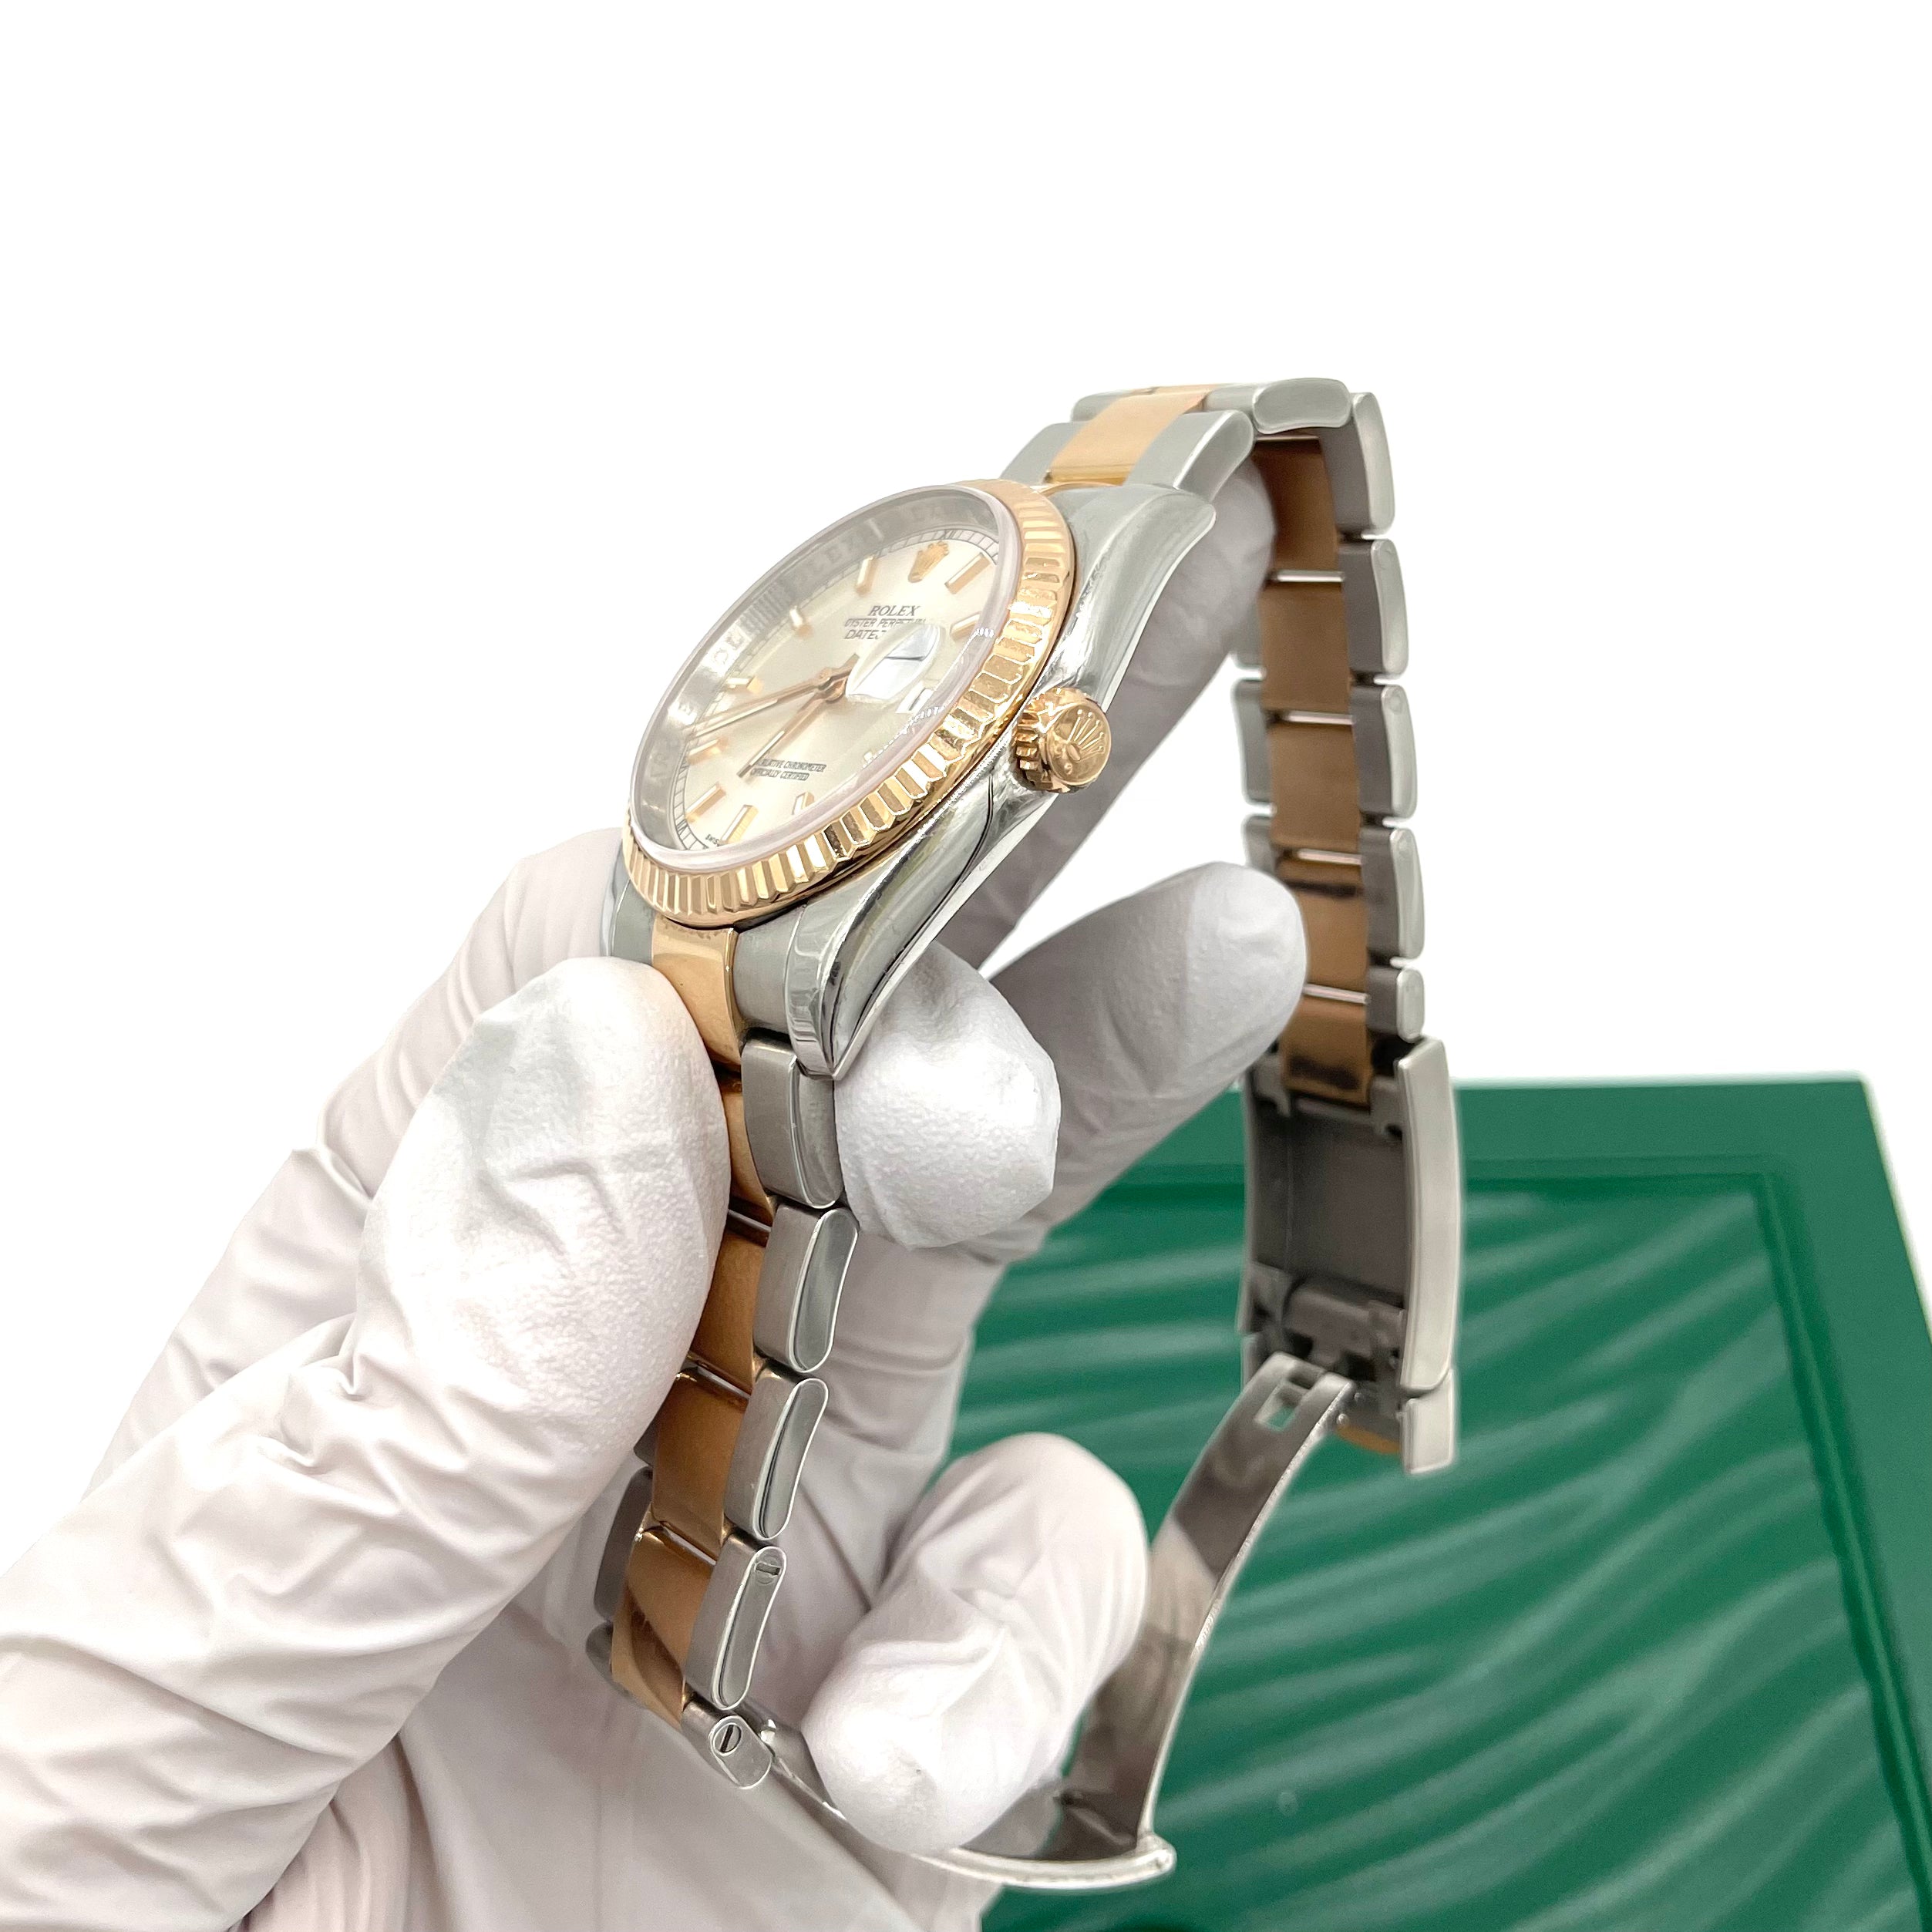 Rolex Datejust 36 Rose Gold Silver Dial Fluted Bezel Watch 116231